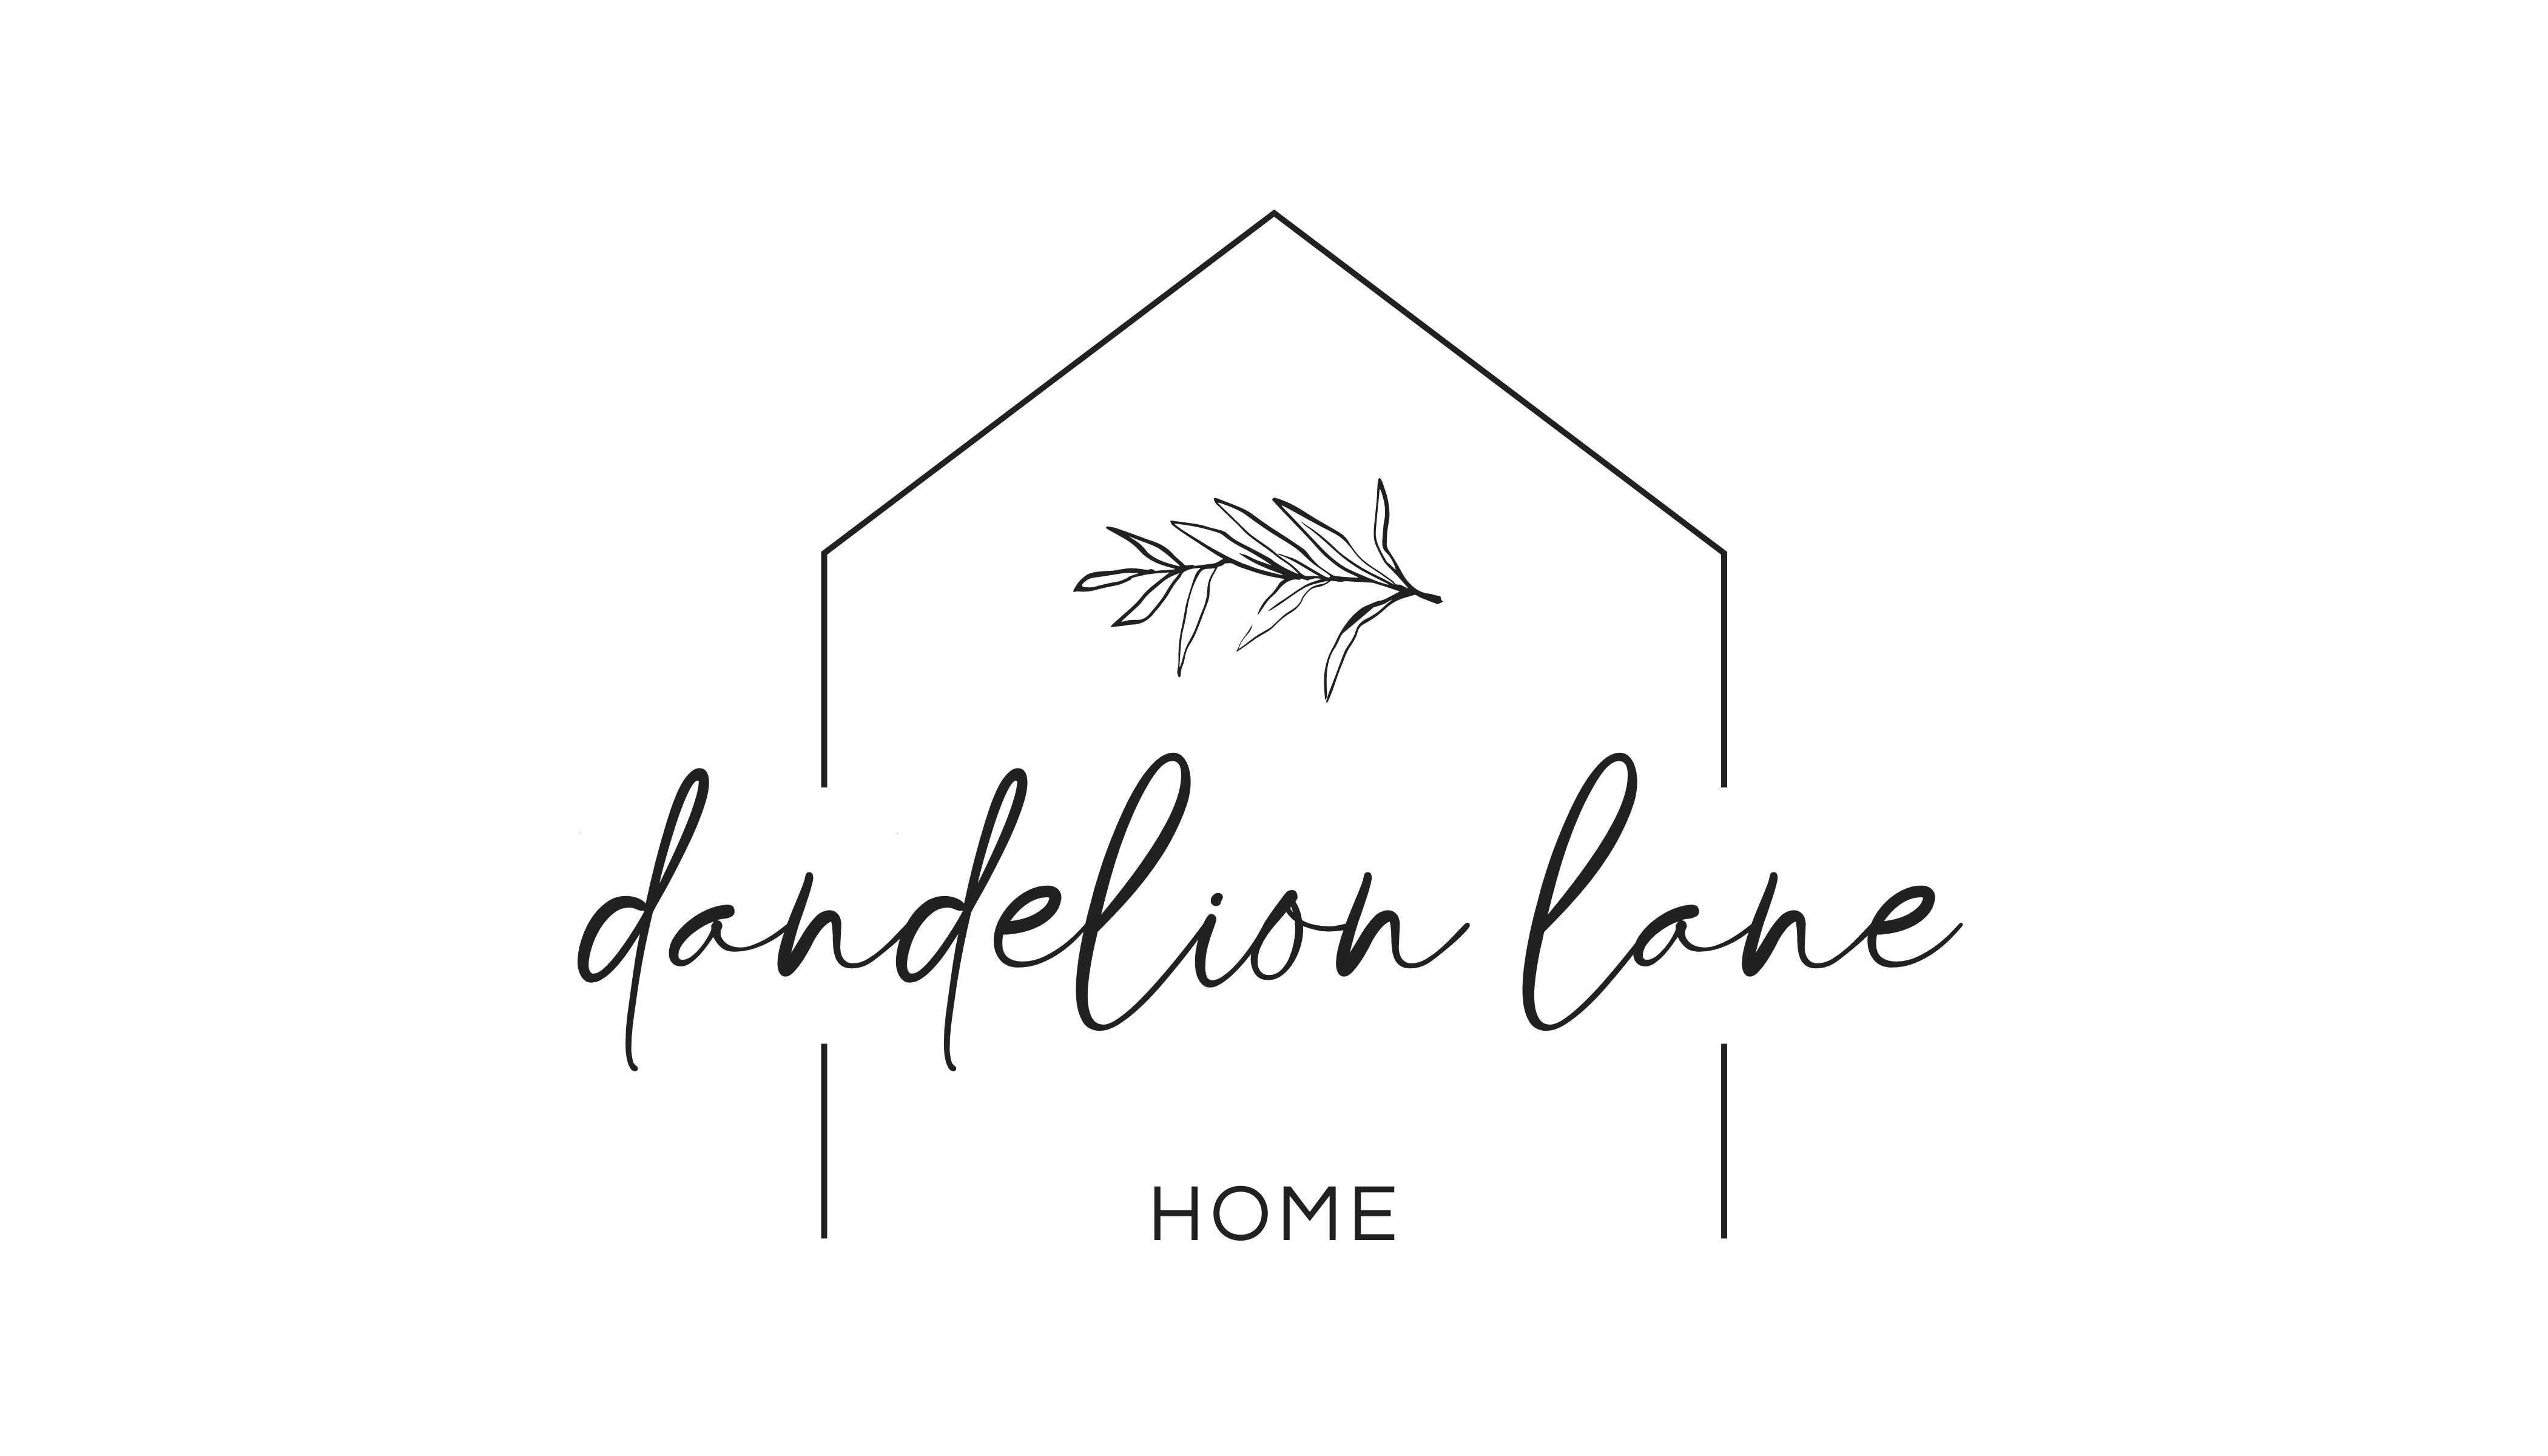 Dandelion Lane